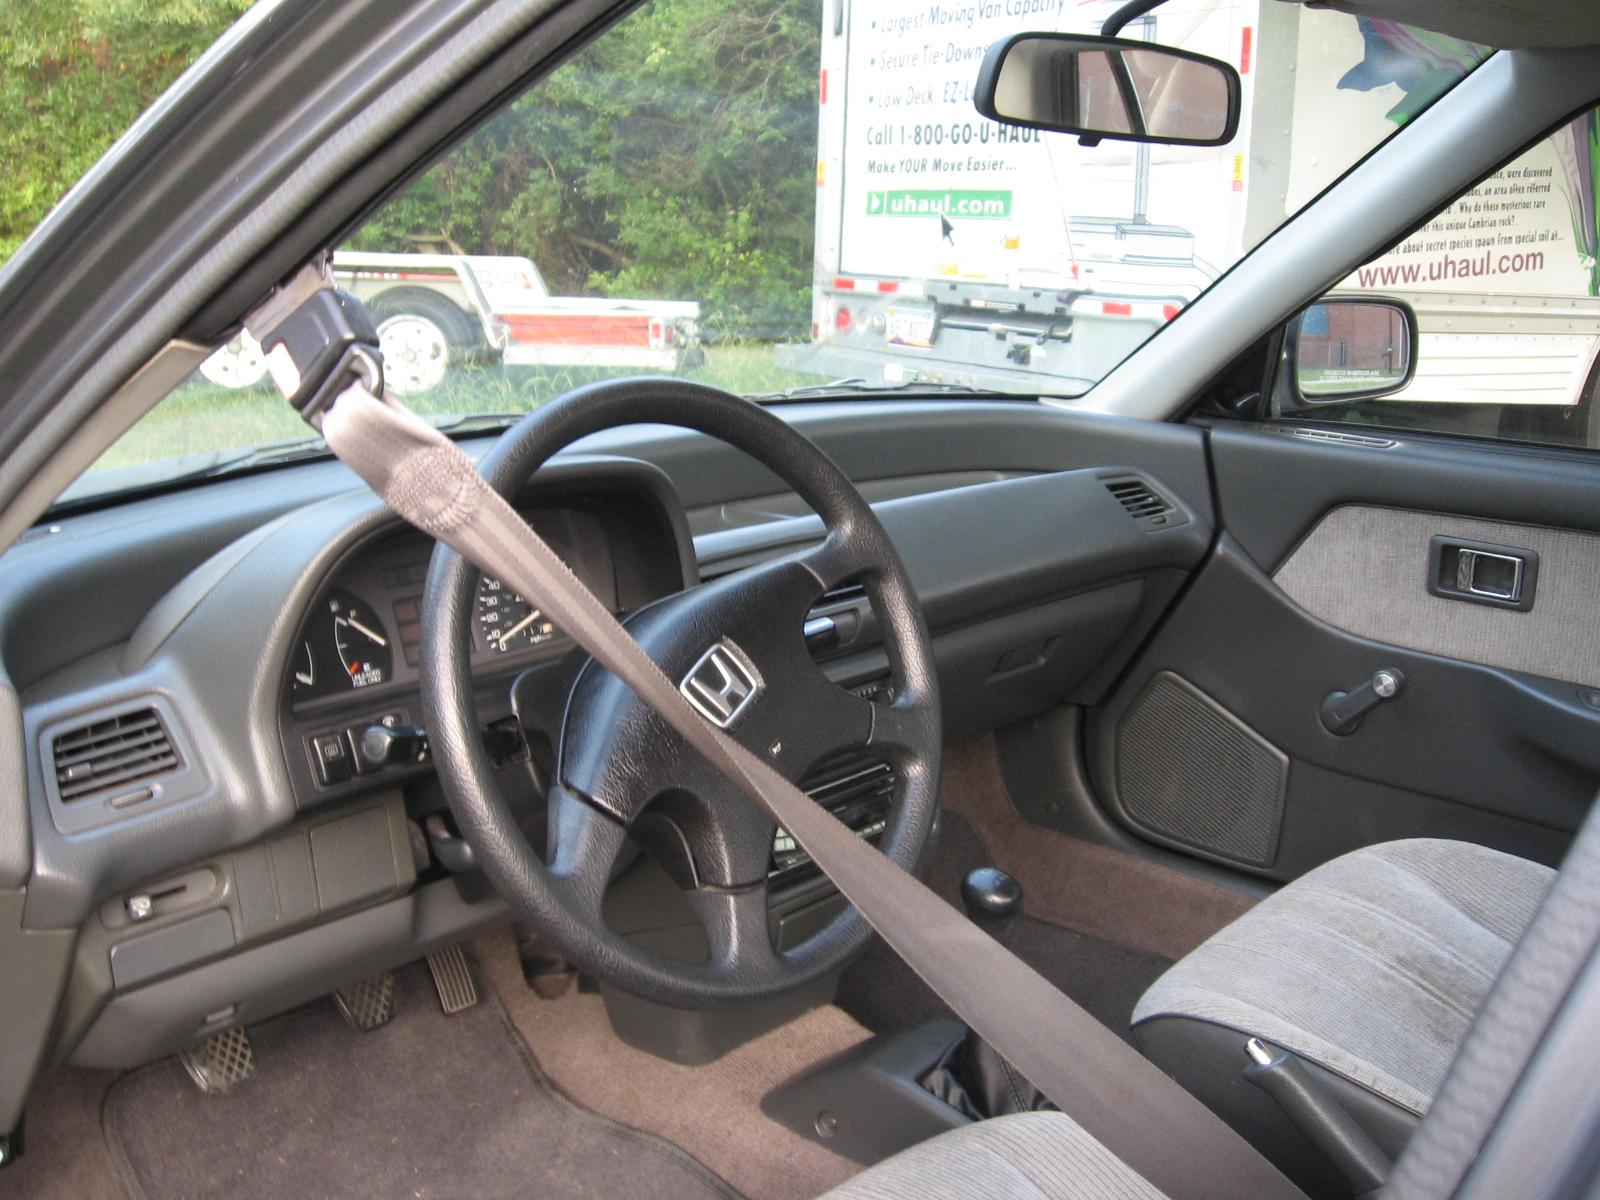 automatic seat belts in a 1990 honda civic